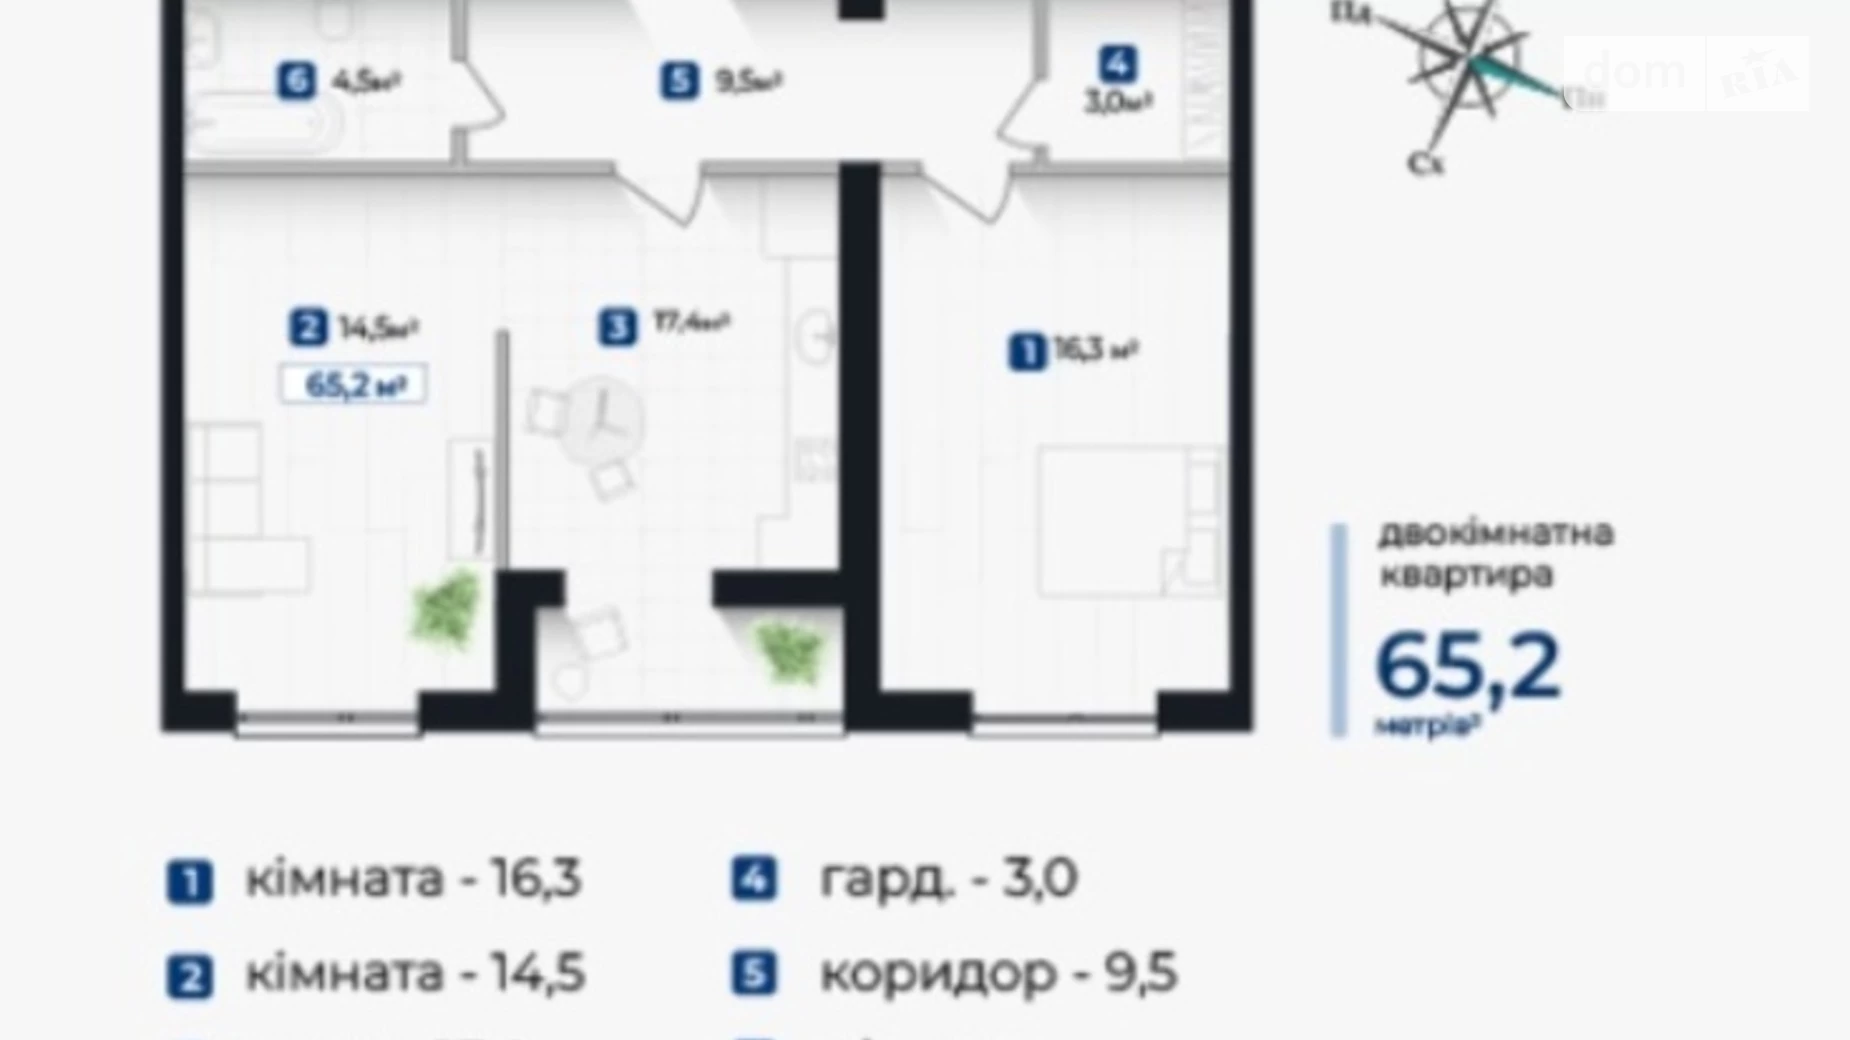 Продается 2-комнатная квартира 65.2 кв. м в Ивано-Франковске, ул. Молодежная, 148 - фото 2